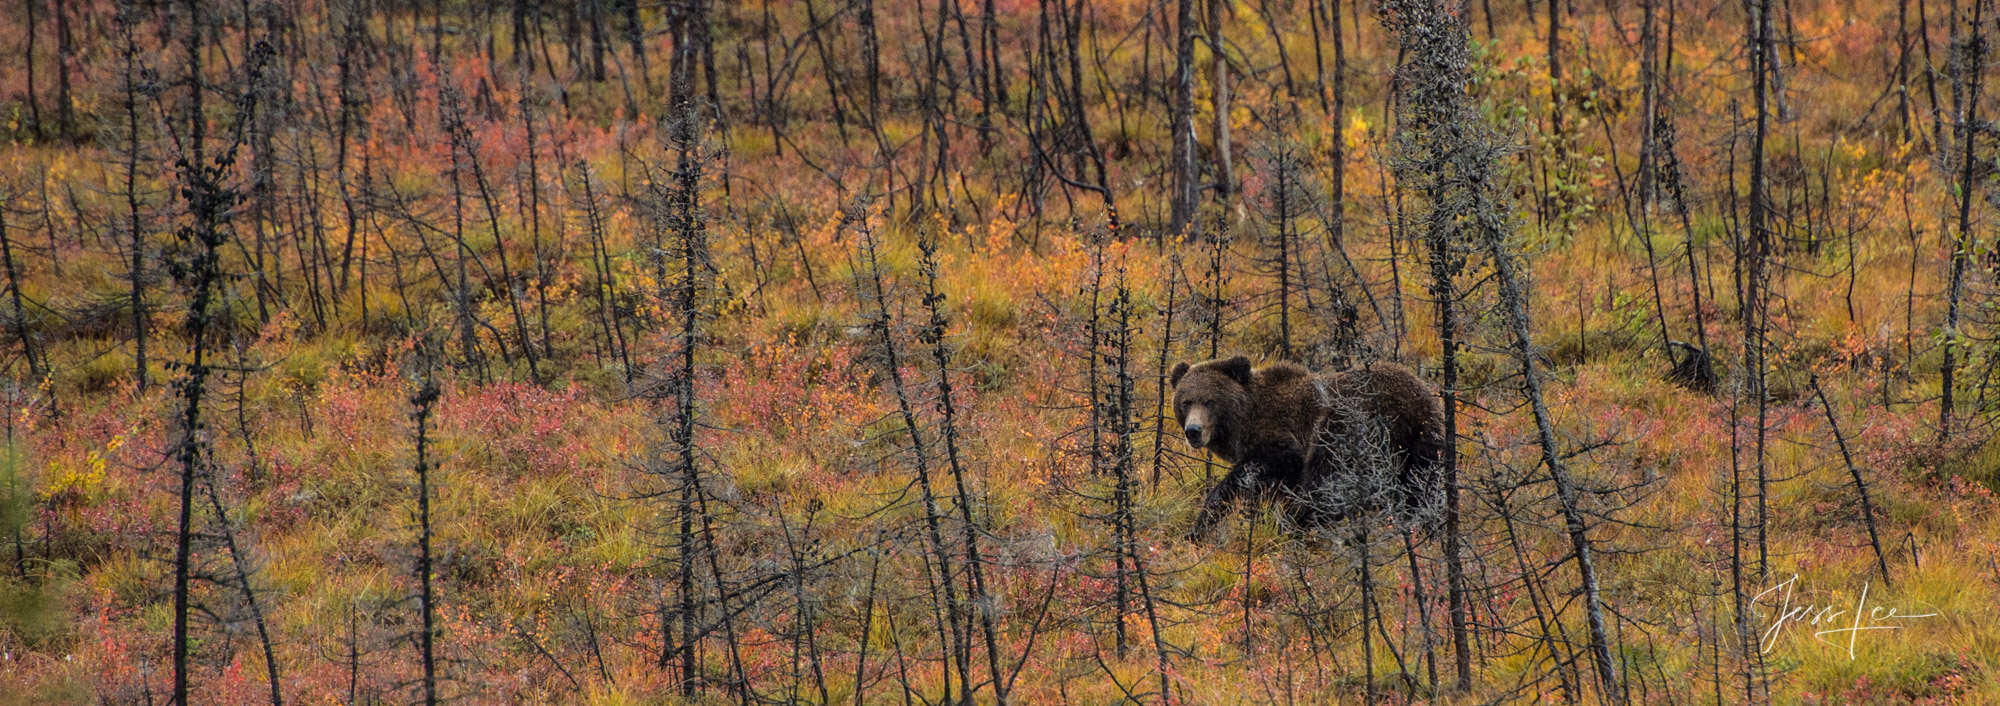 Grizzly bear exploring in Alaska's Arctic tundra. 